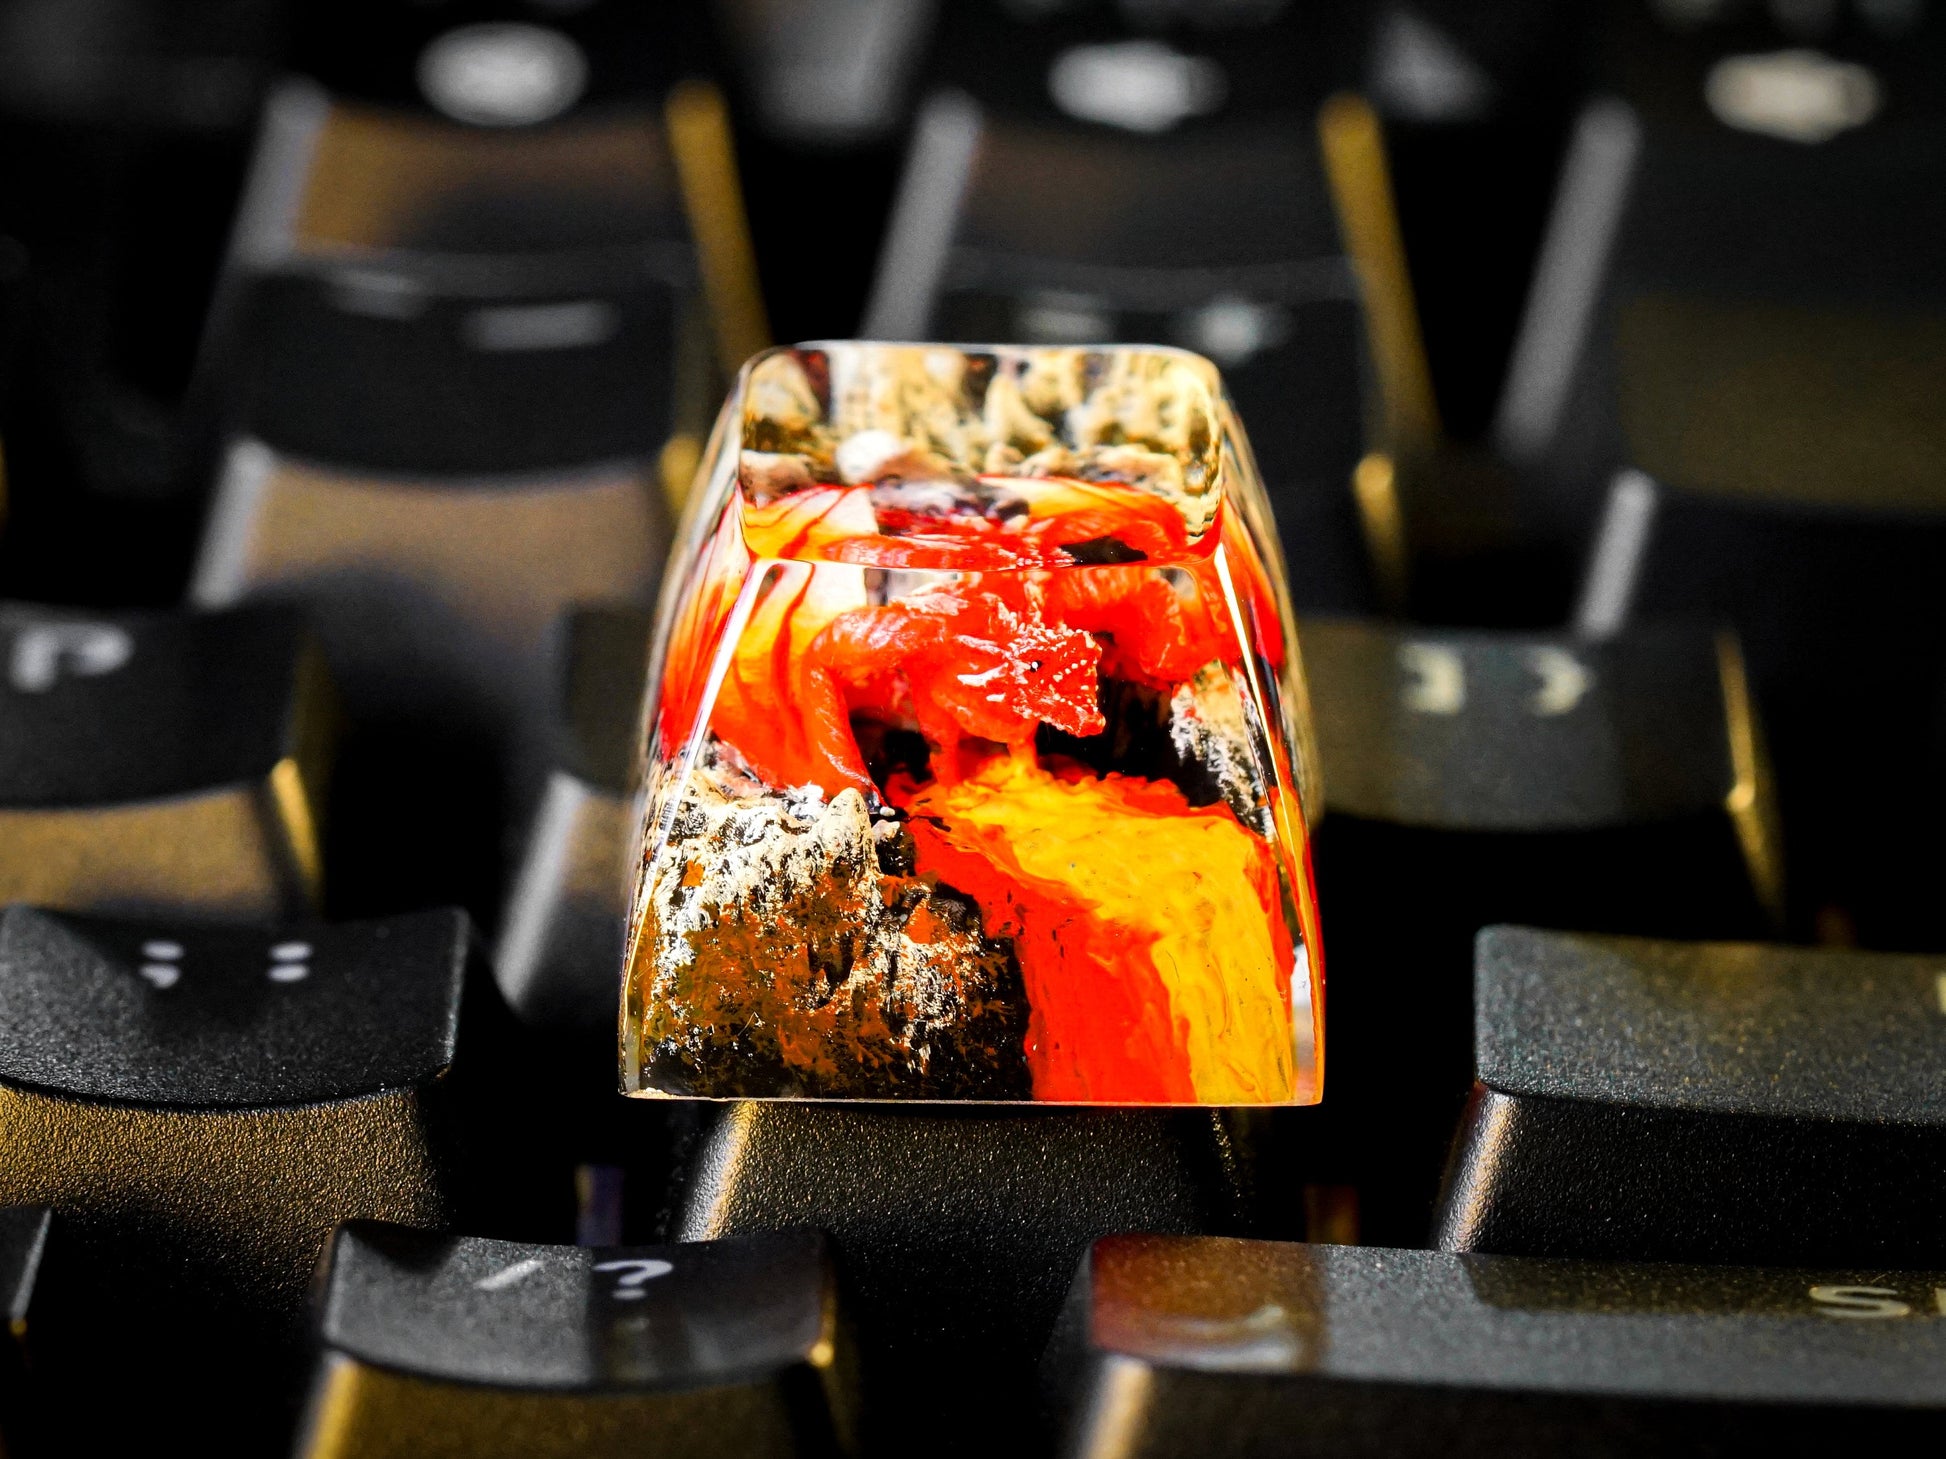 Orange Dragon Keycap- Artisan Keycap- SA Profile Keycap- Resin Keycap- Keycap for Cherry MX Keyboard - Datkey Studio